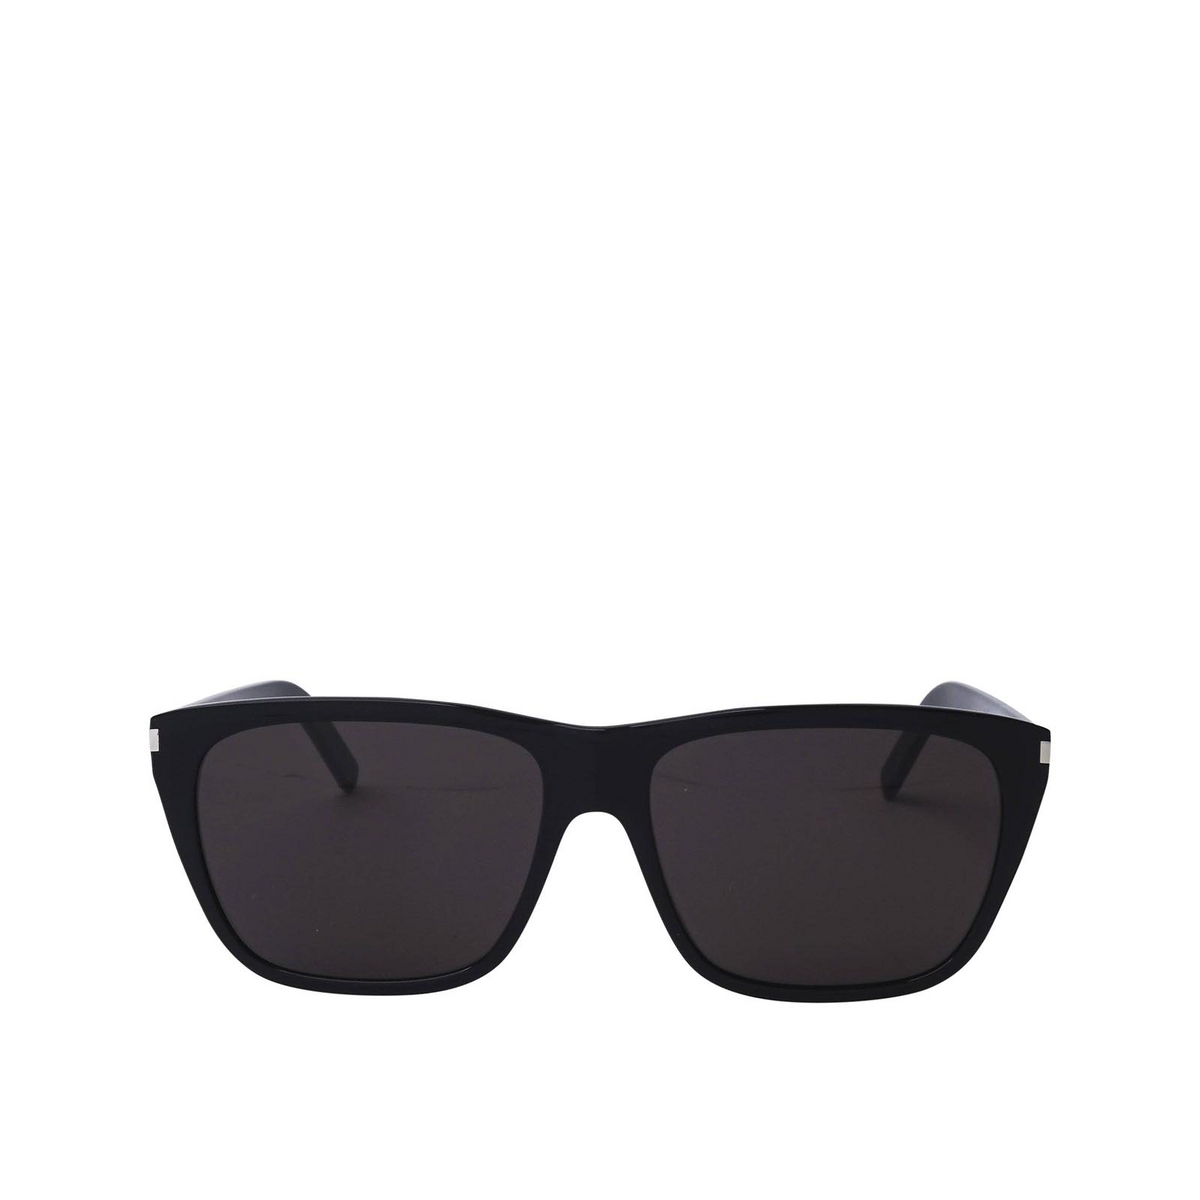 Saint Laurent® Square Sunglasses: SL 431 SLIM color Black 001 - 1/2.